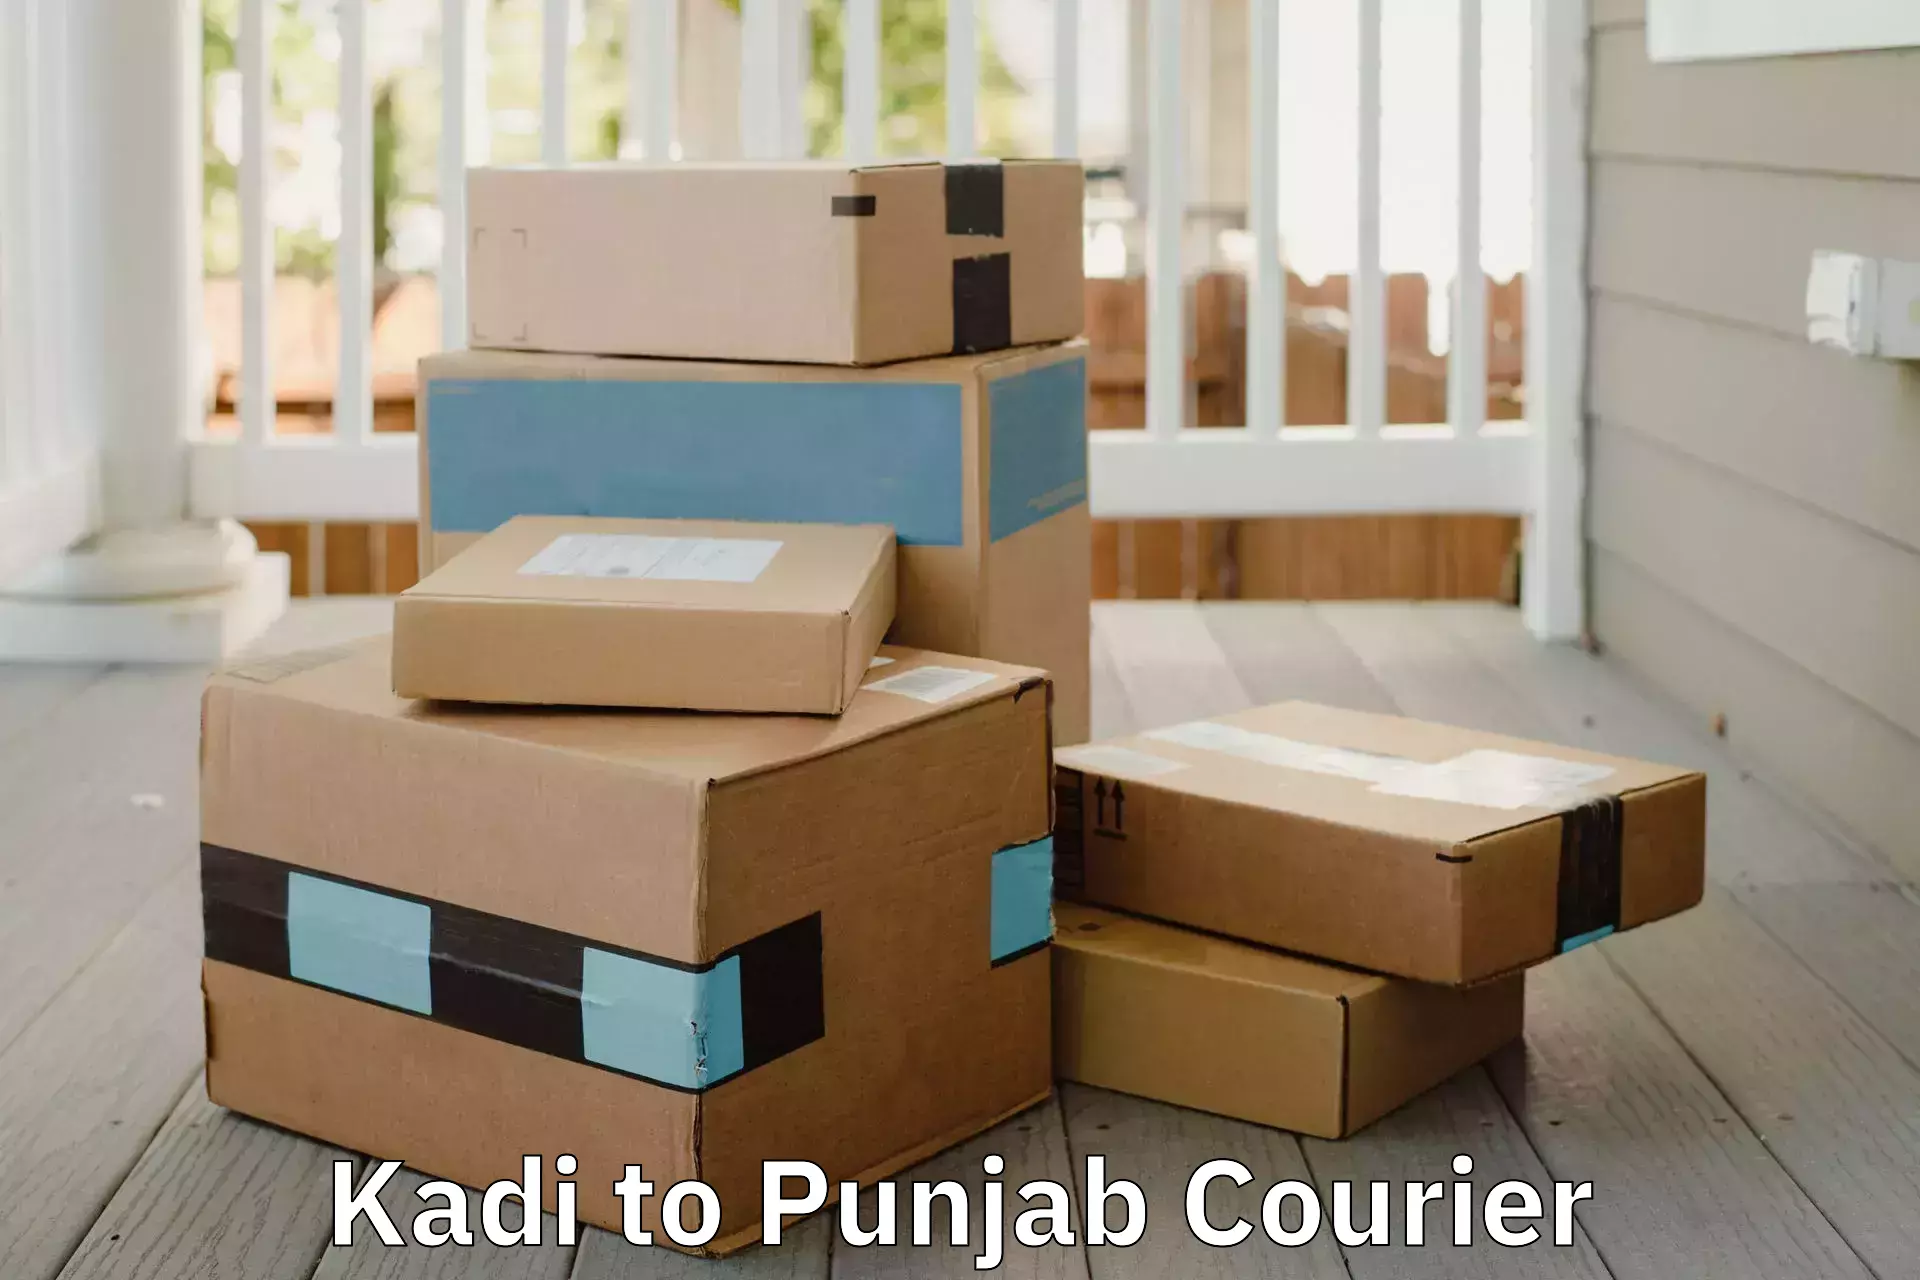 Trusted moving company Kadi to Punjab